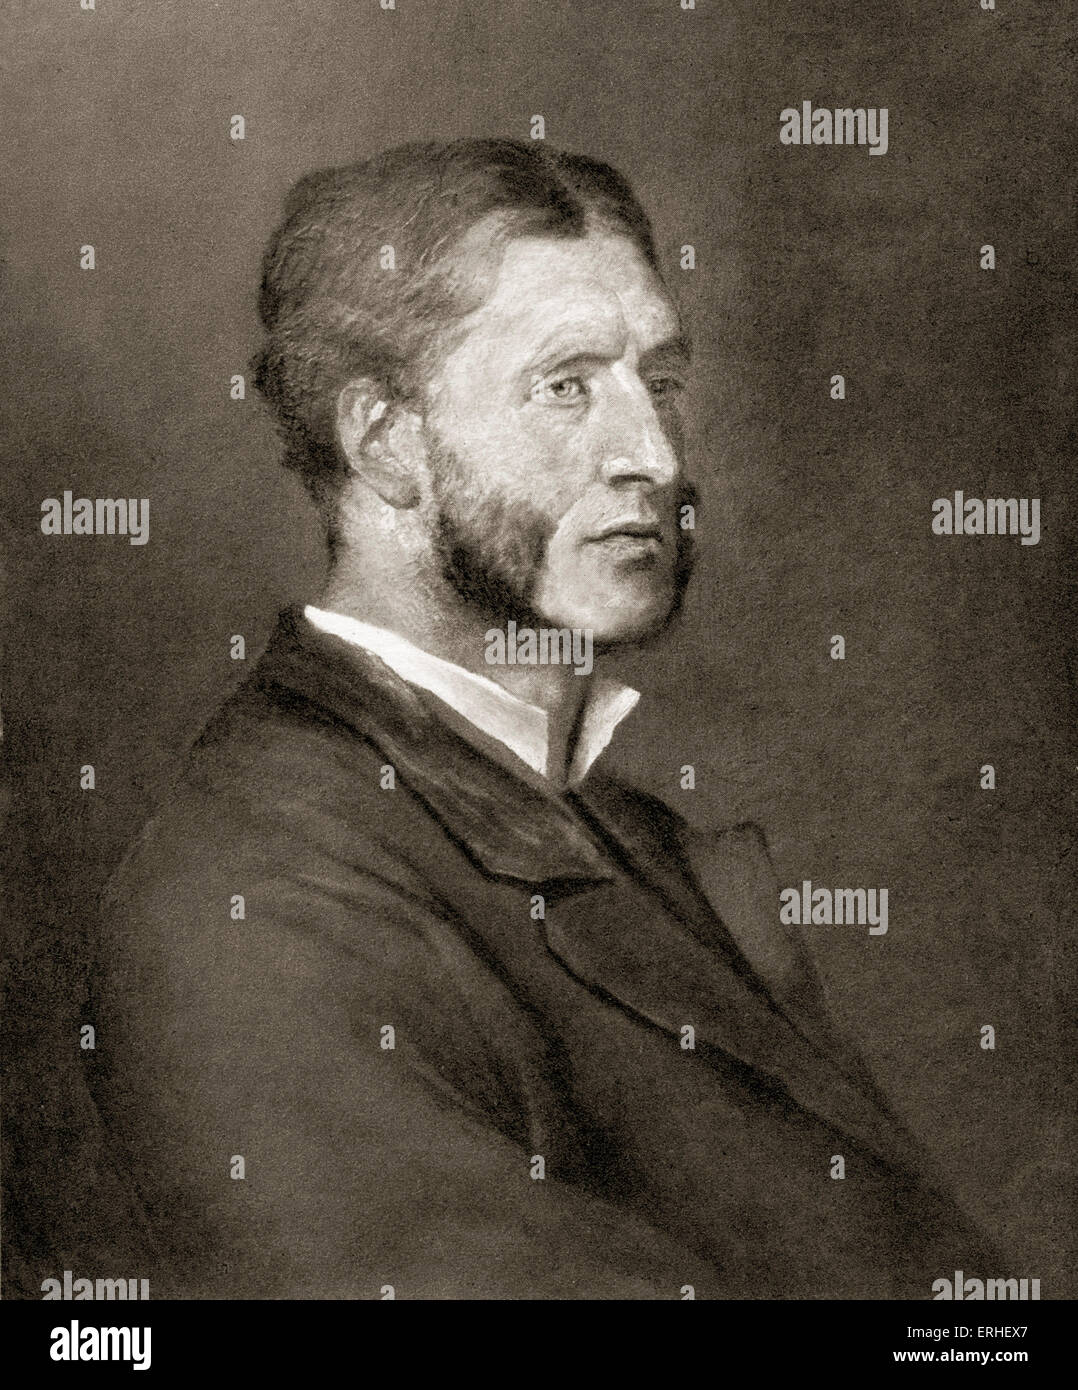 Matthew Arnold - poeta inglese, critico letterario e teorico del poeta inglese, critico letterario e teorico. 1822-1888 Foto Stock